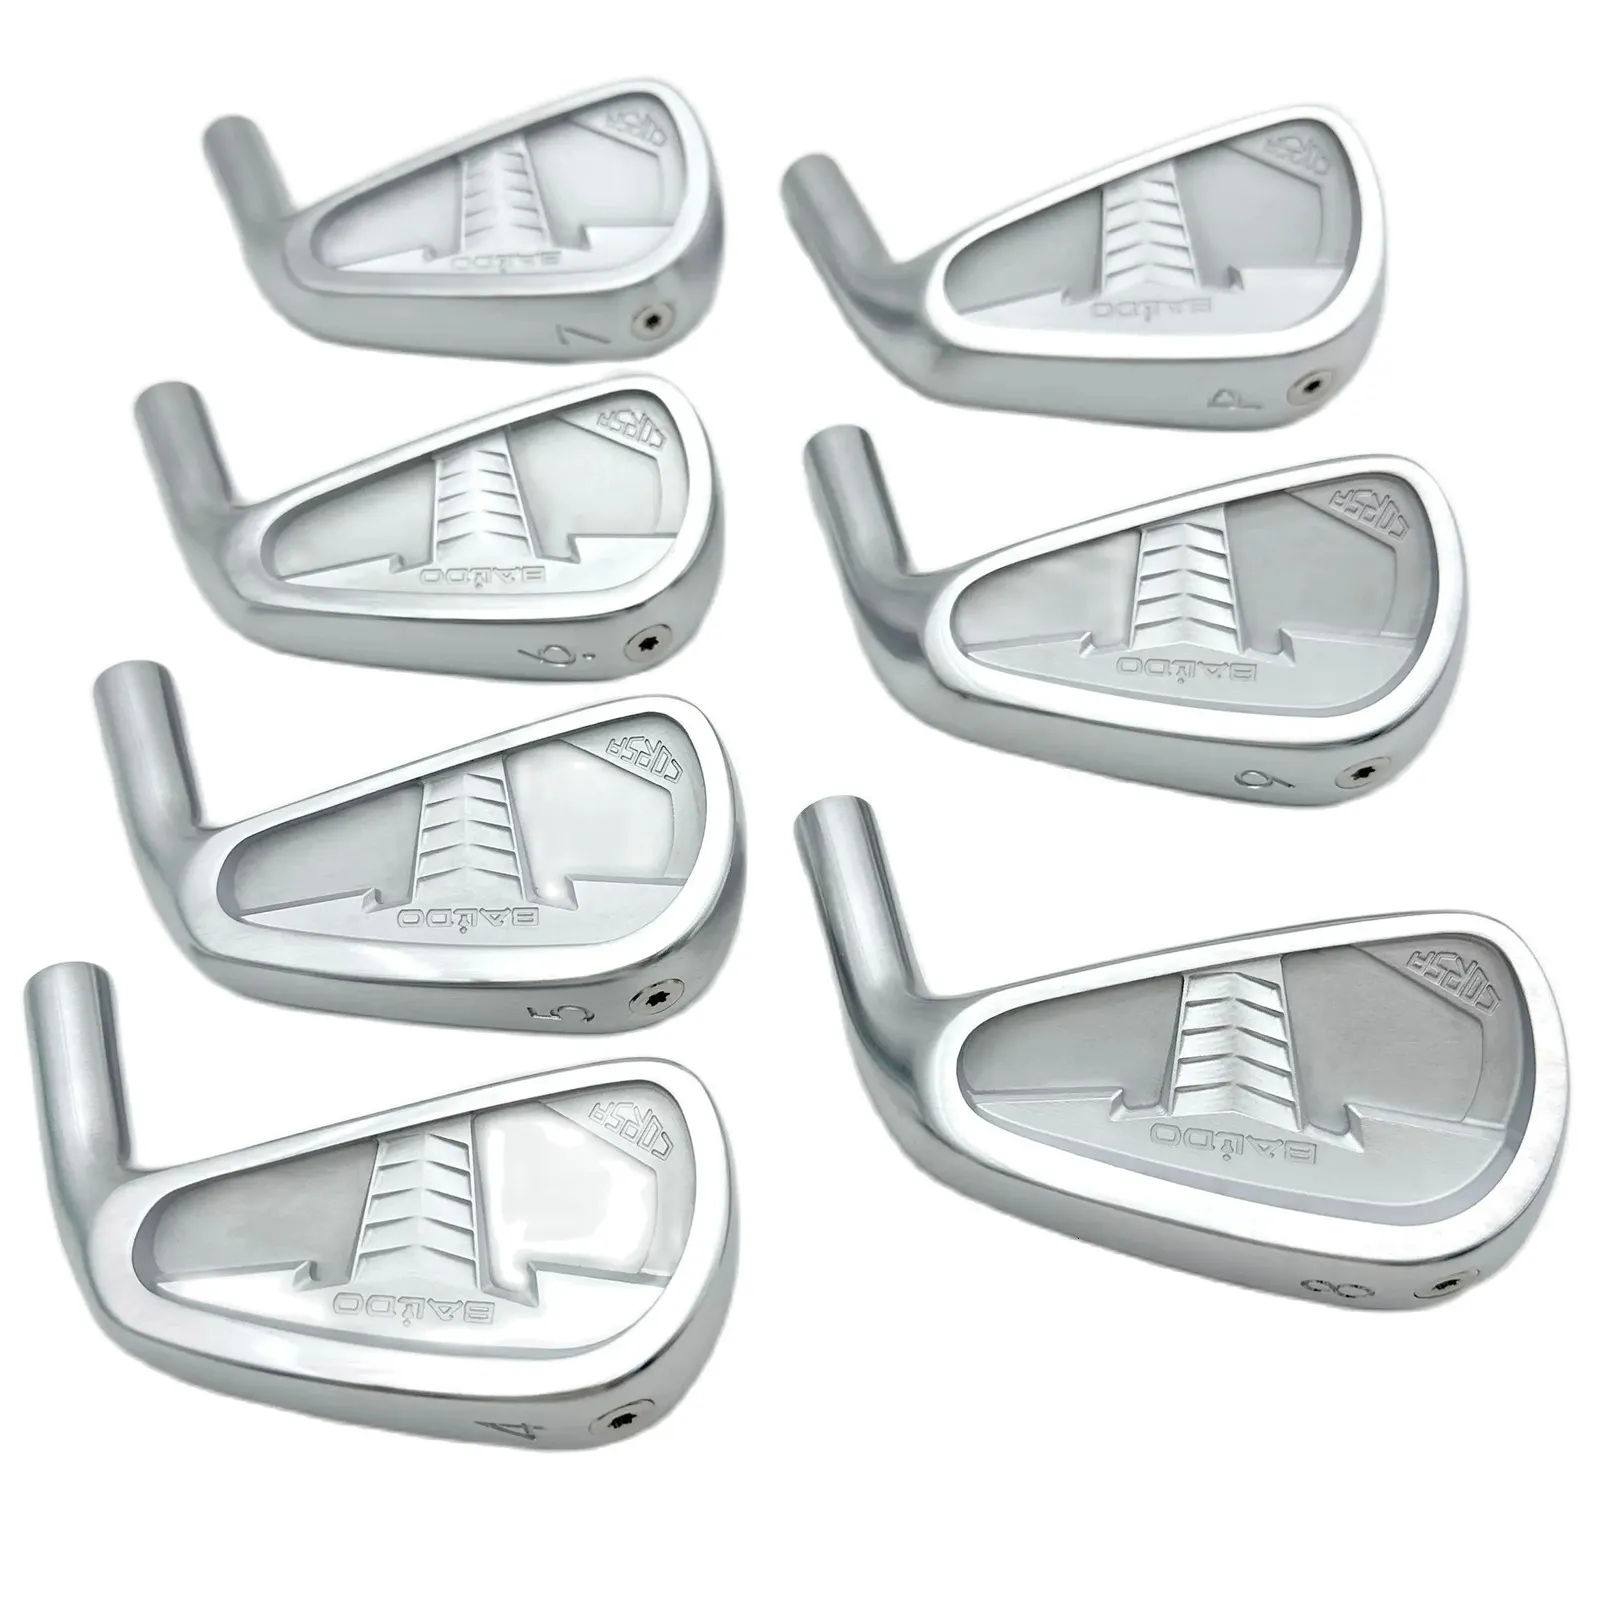 Outros produtos de golfe Conjunto de clube de golfe Conjunto de ferro Baldo 456789P com eixo Baldo CORSA Conjuntos de ferro de golfe CNC forjado 231211